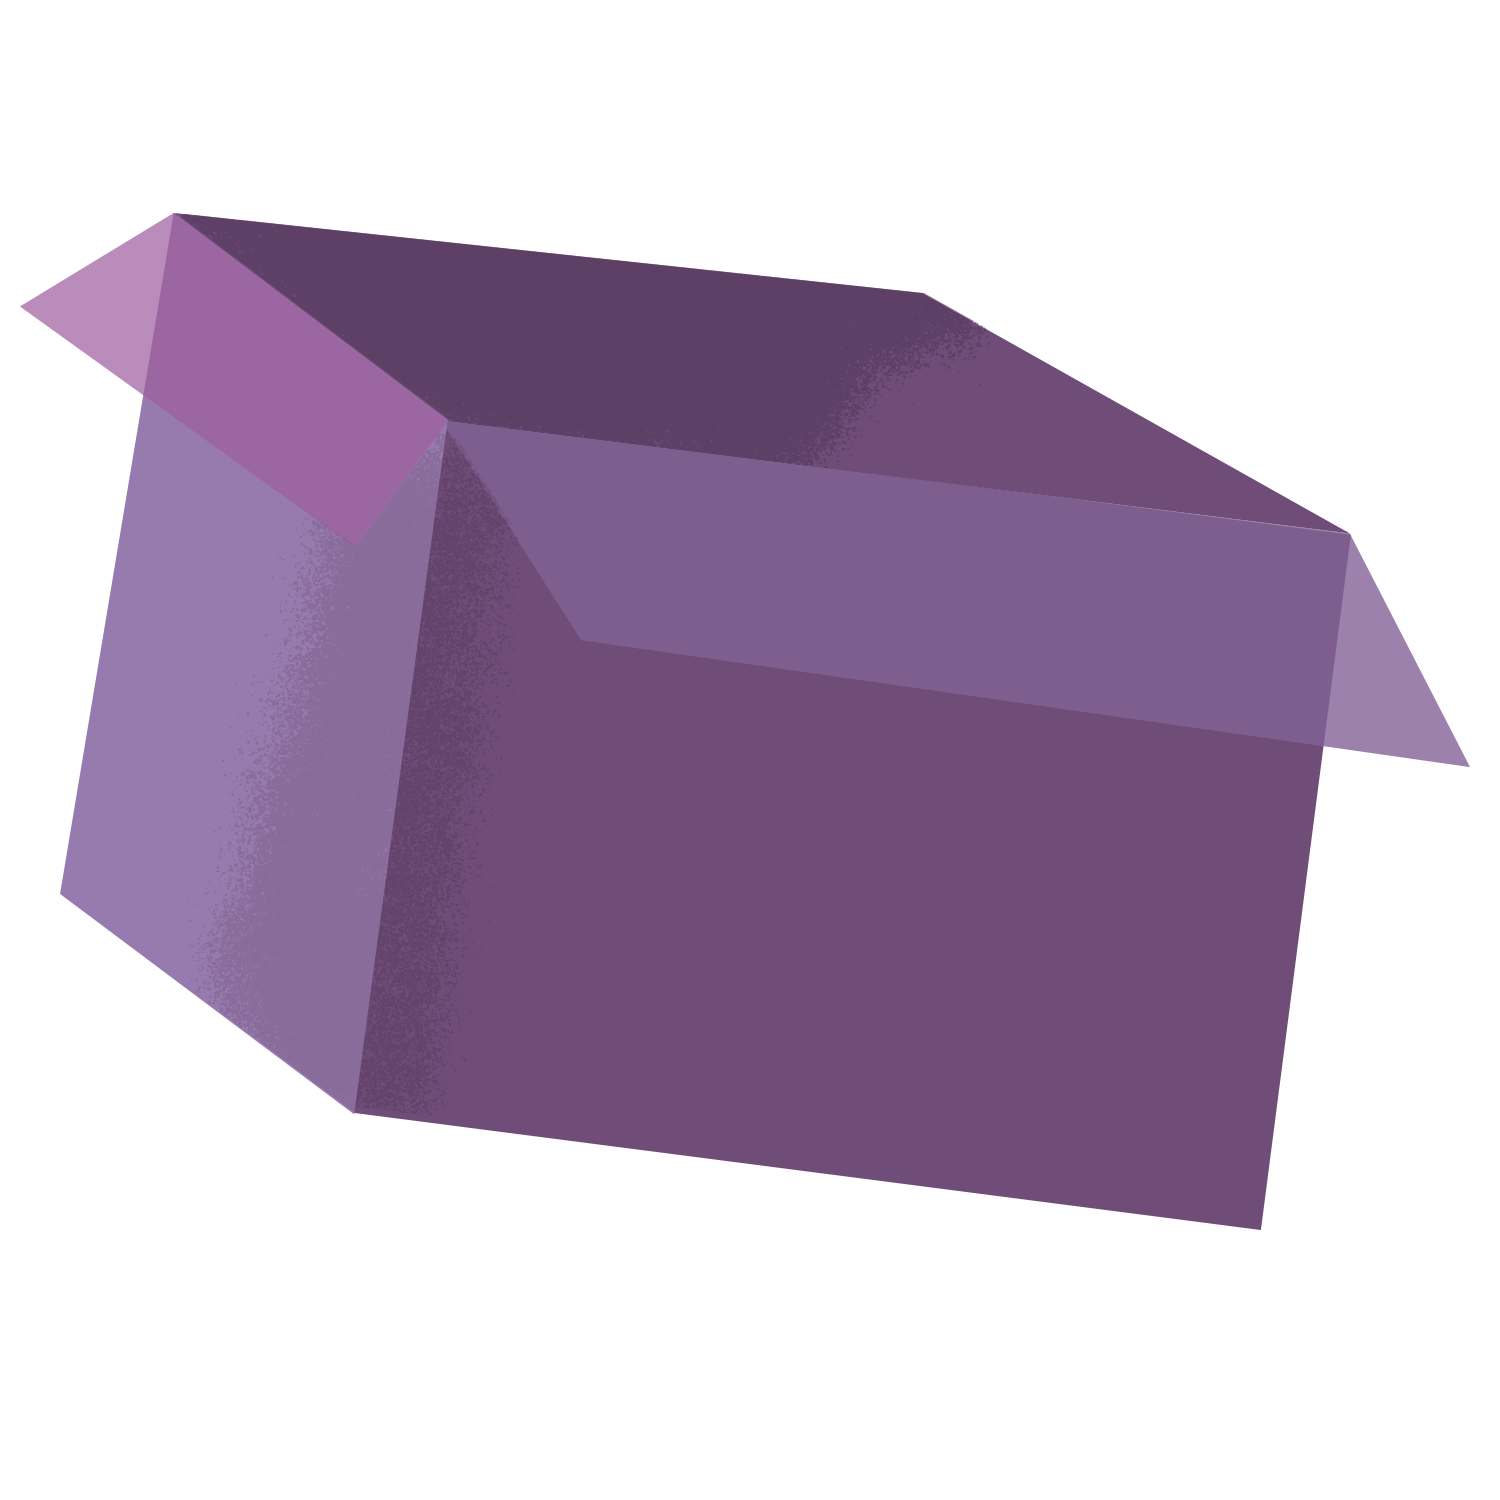 Box illustration